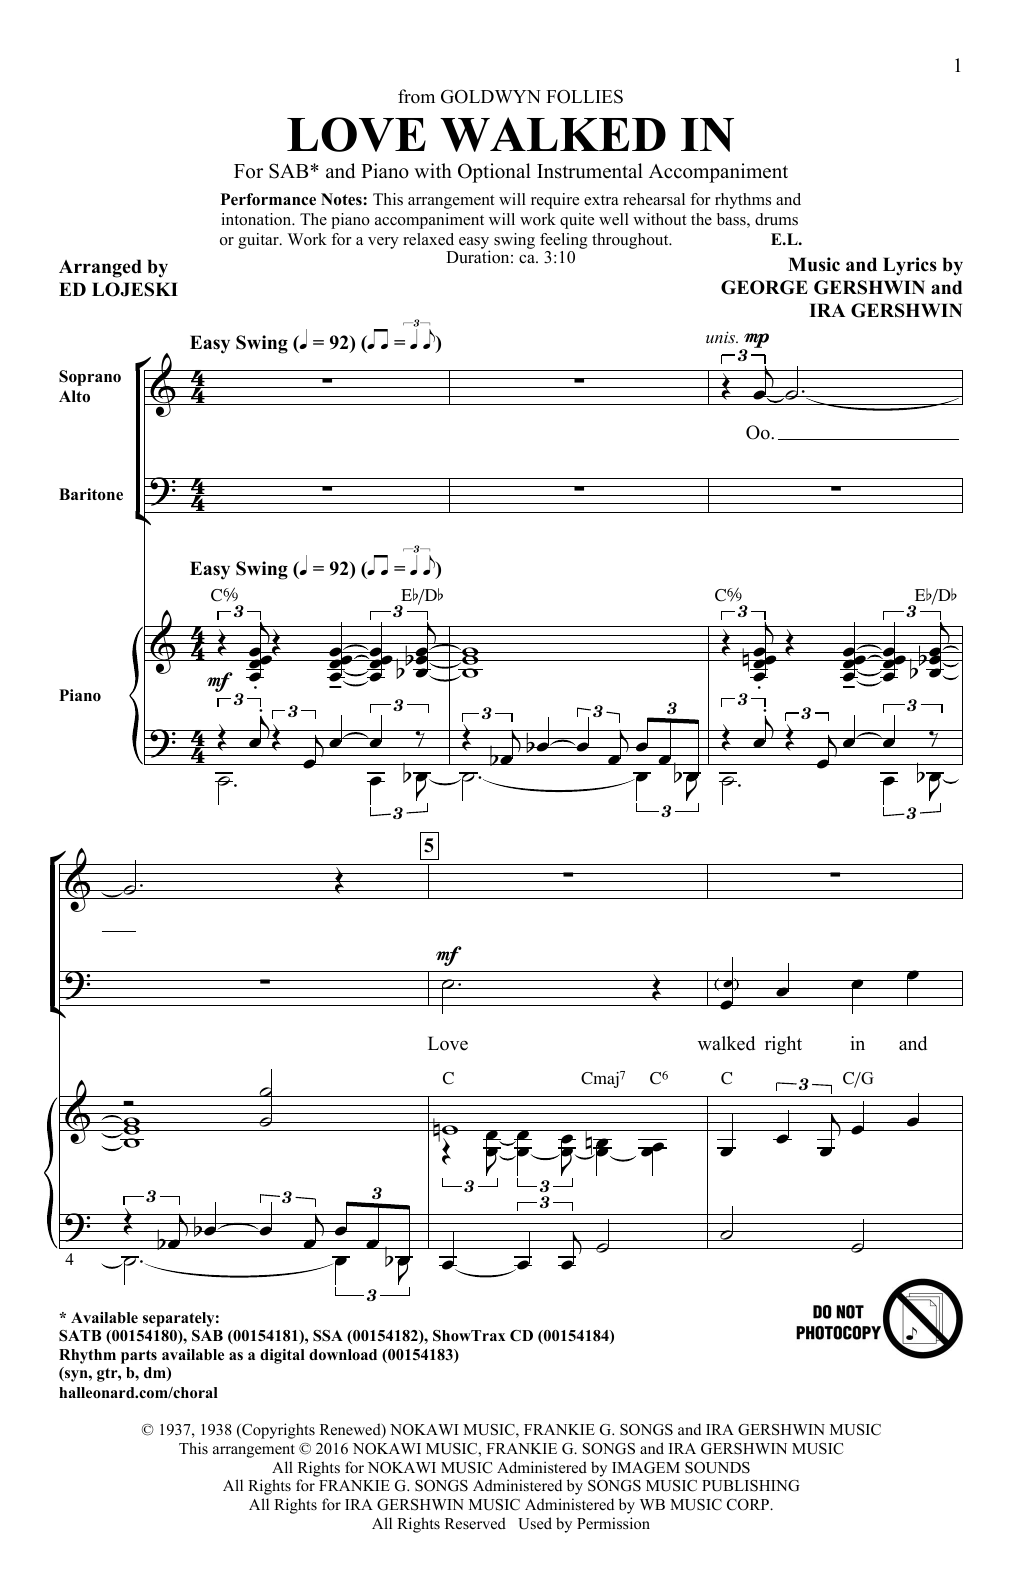 Ed Lojeski Love Walked In Sheet Music Notes & Chords for SATB - Download or Print PDF